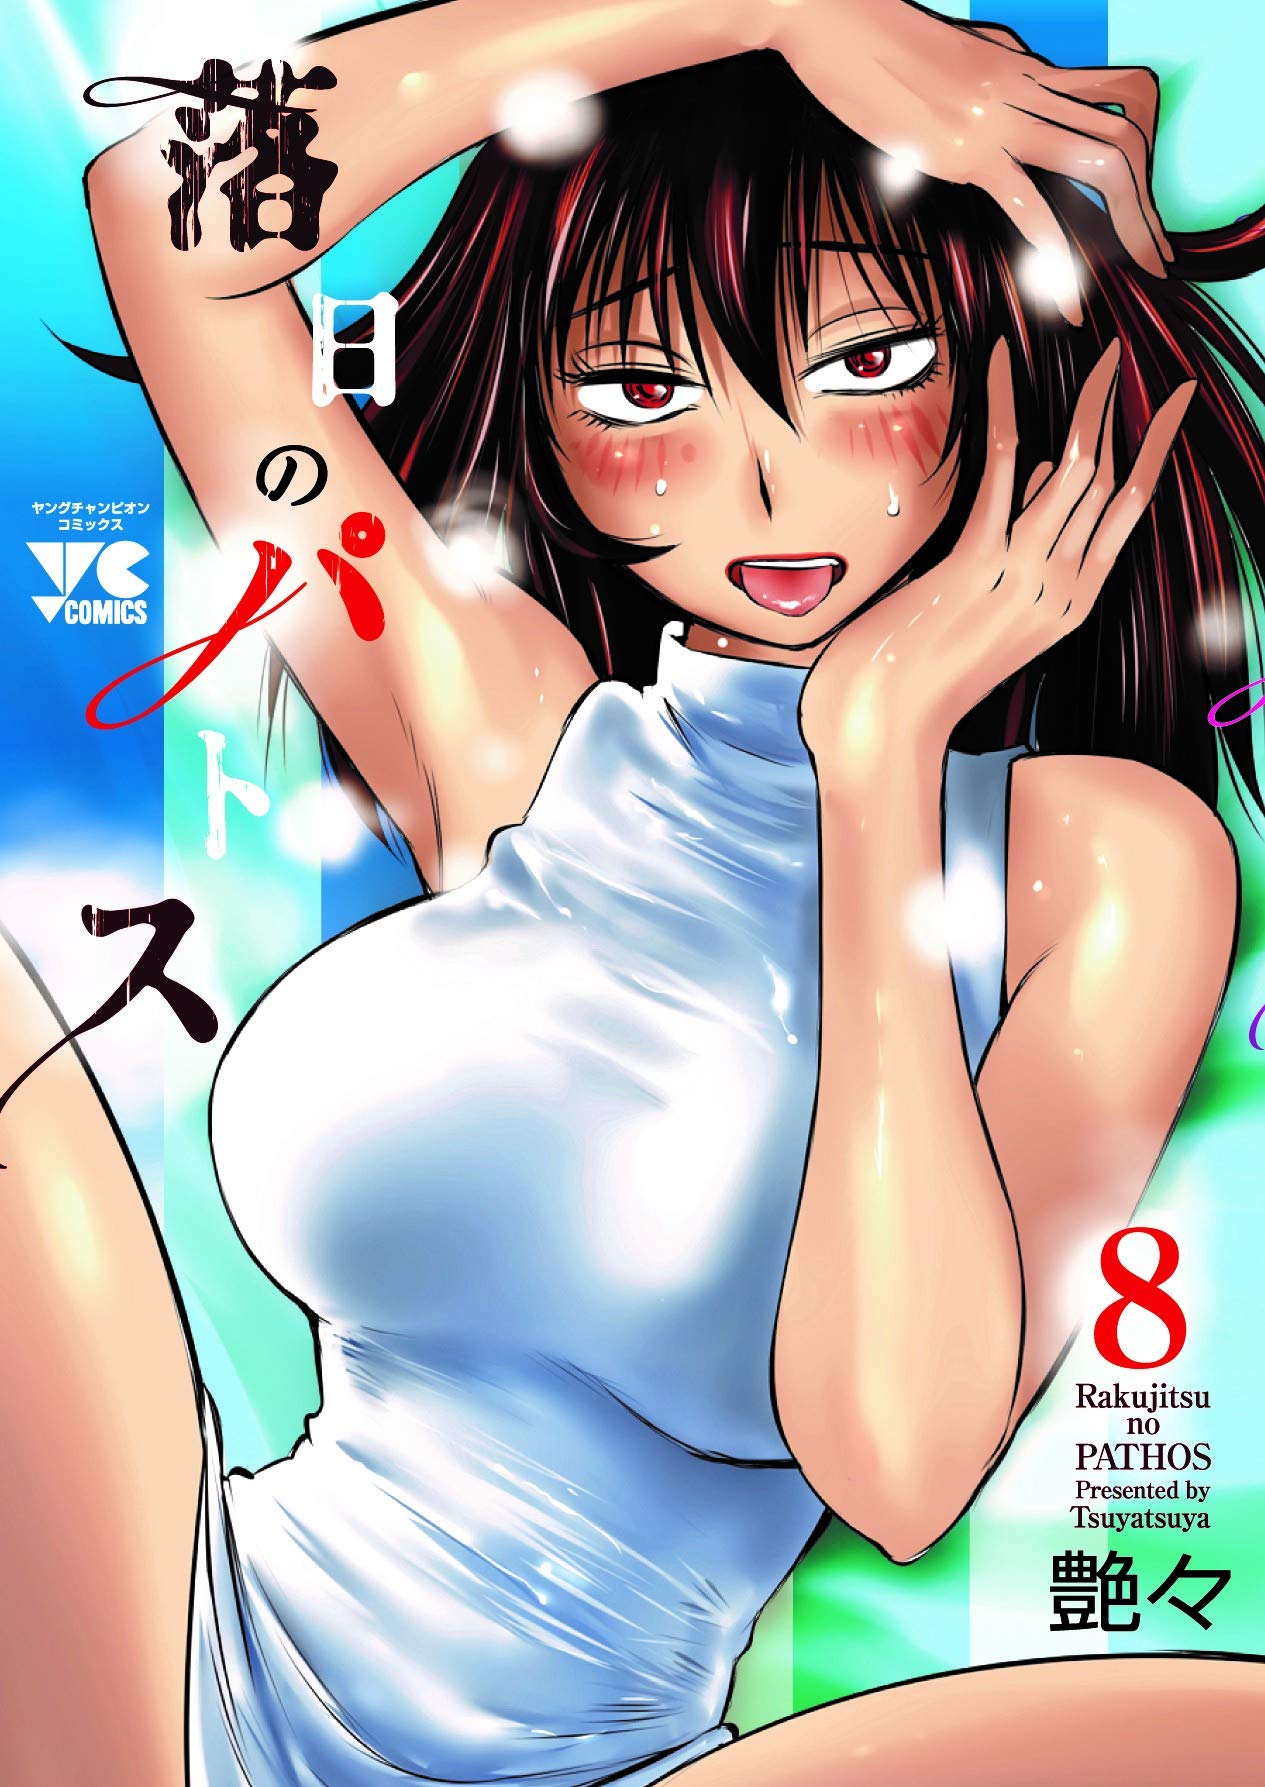 Manga Rakujitsu no Pathos vol.8 (落日のパトス(8) (ヤングチャンピオン・コミックス))  / Tsuyatsuya